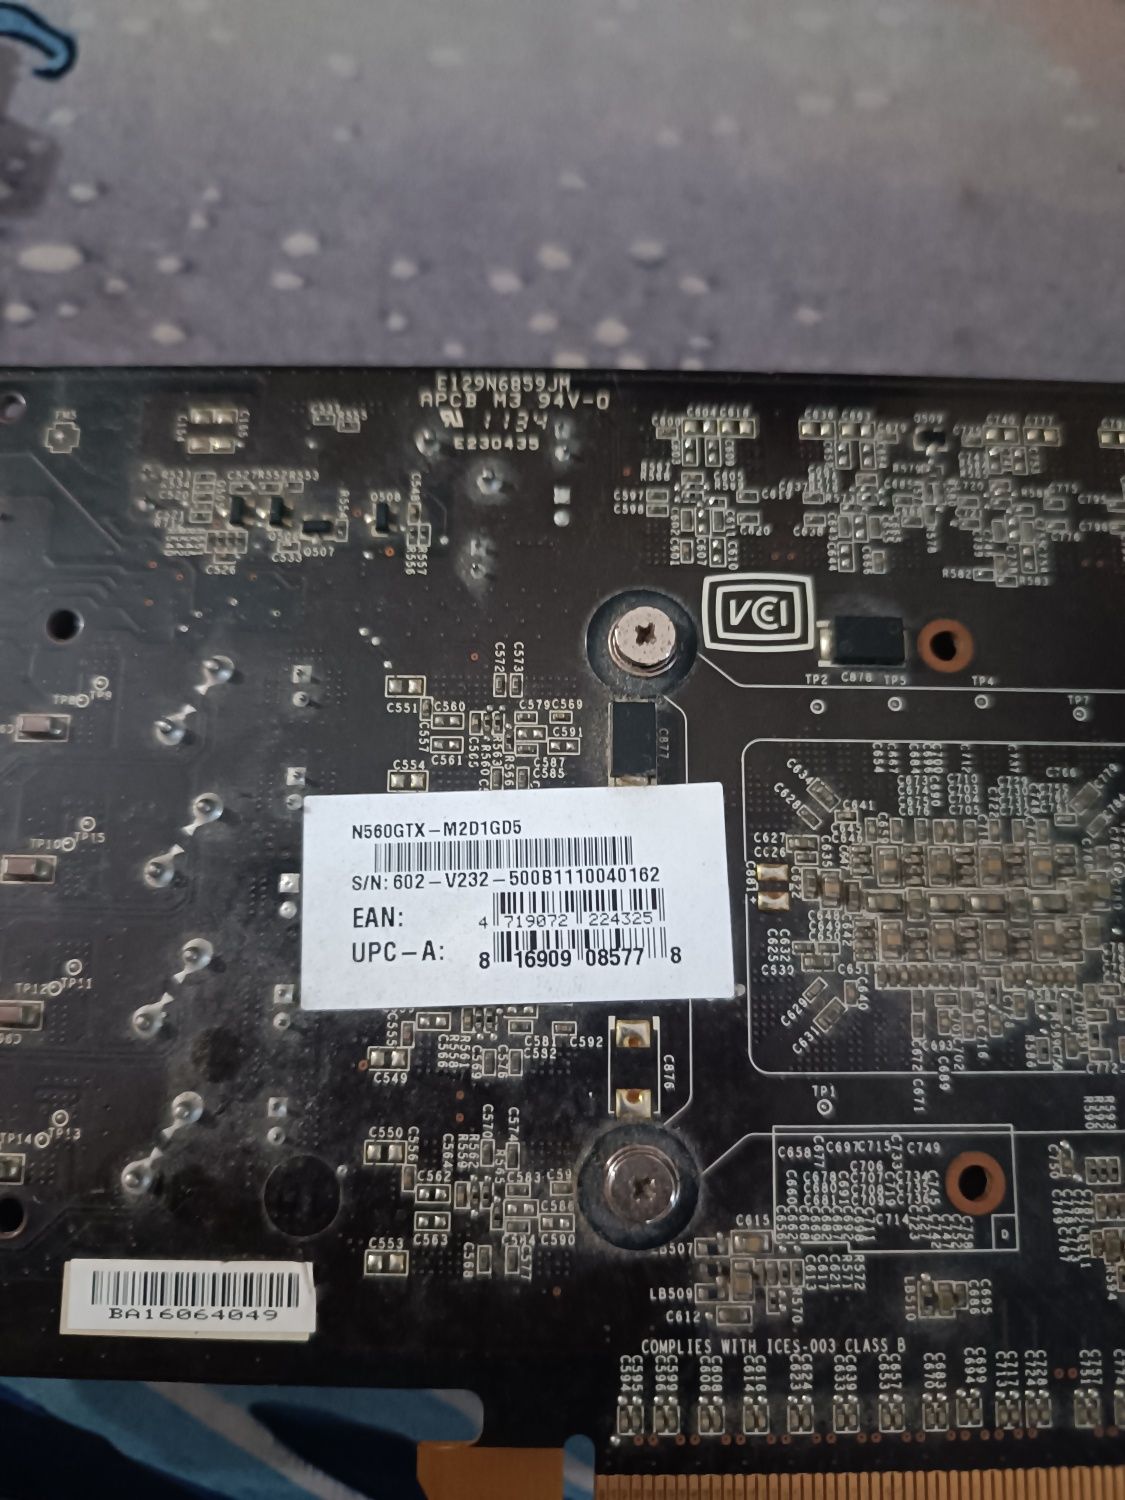 Placa video - MSI GeForce GTX 560 - PCIe 2.0 -1GB GDDR5 - 256 bit

1GB